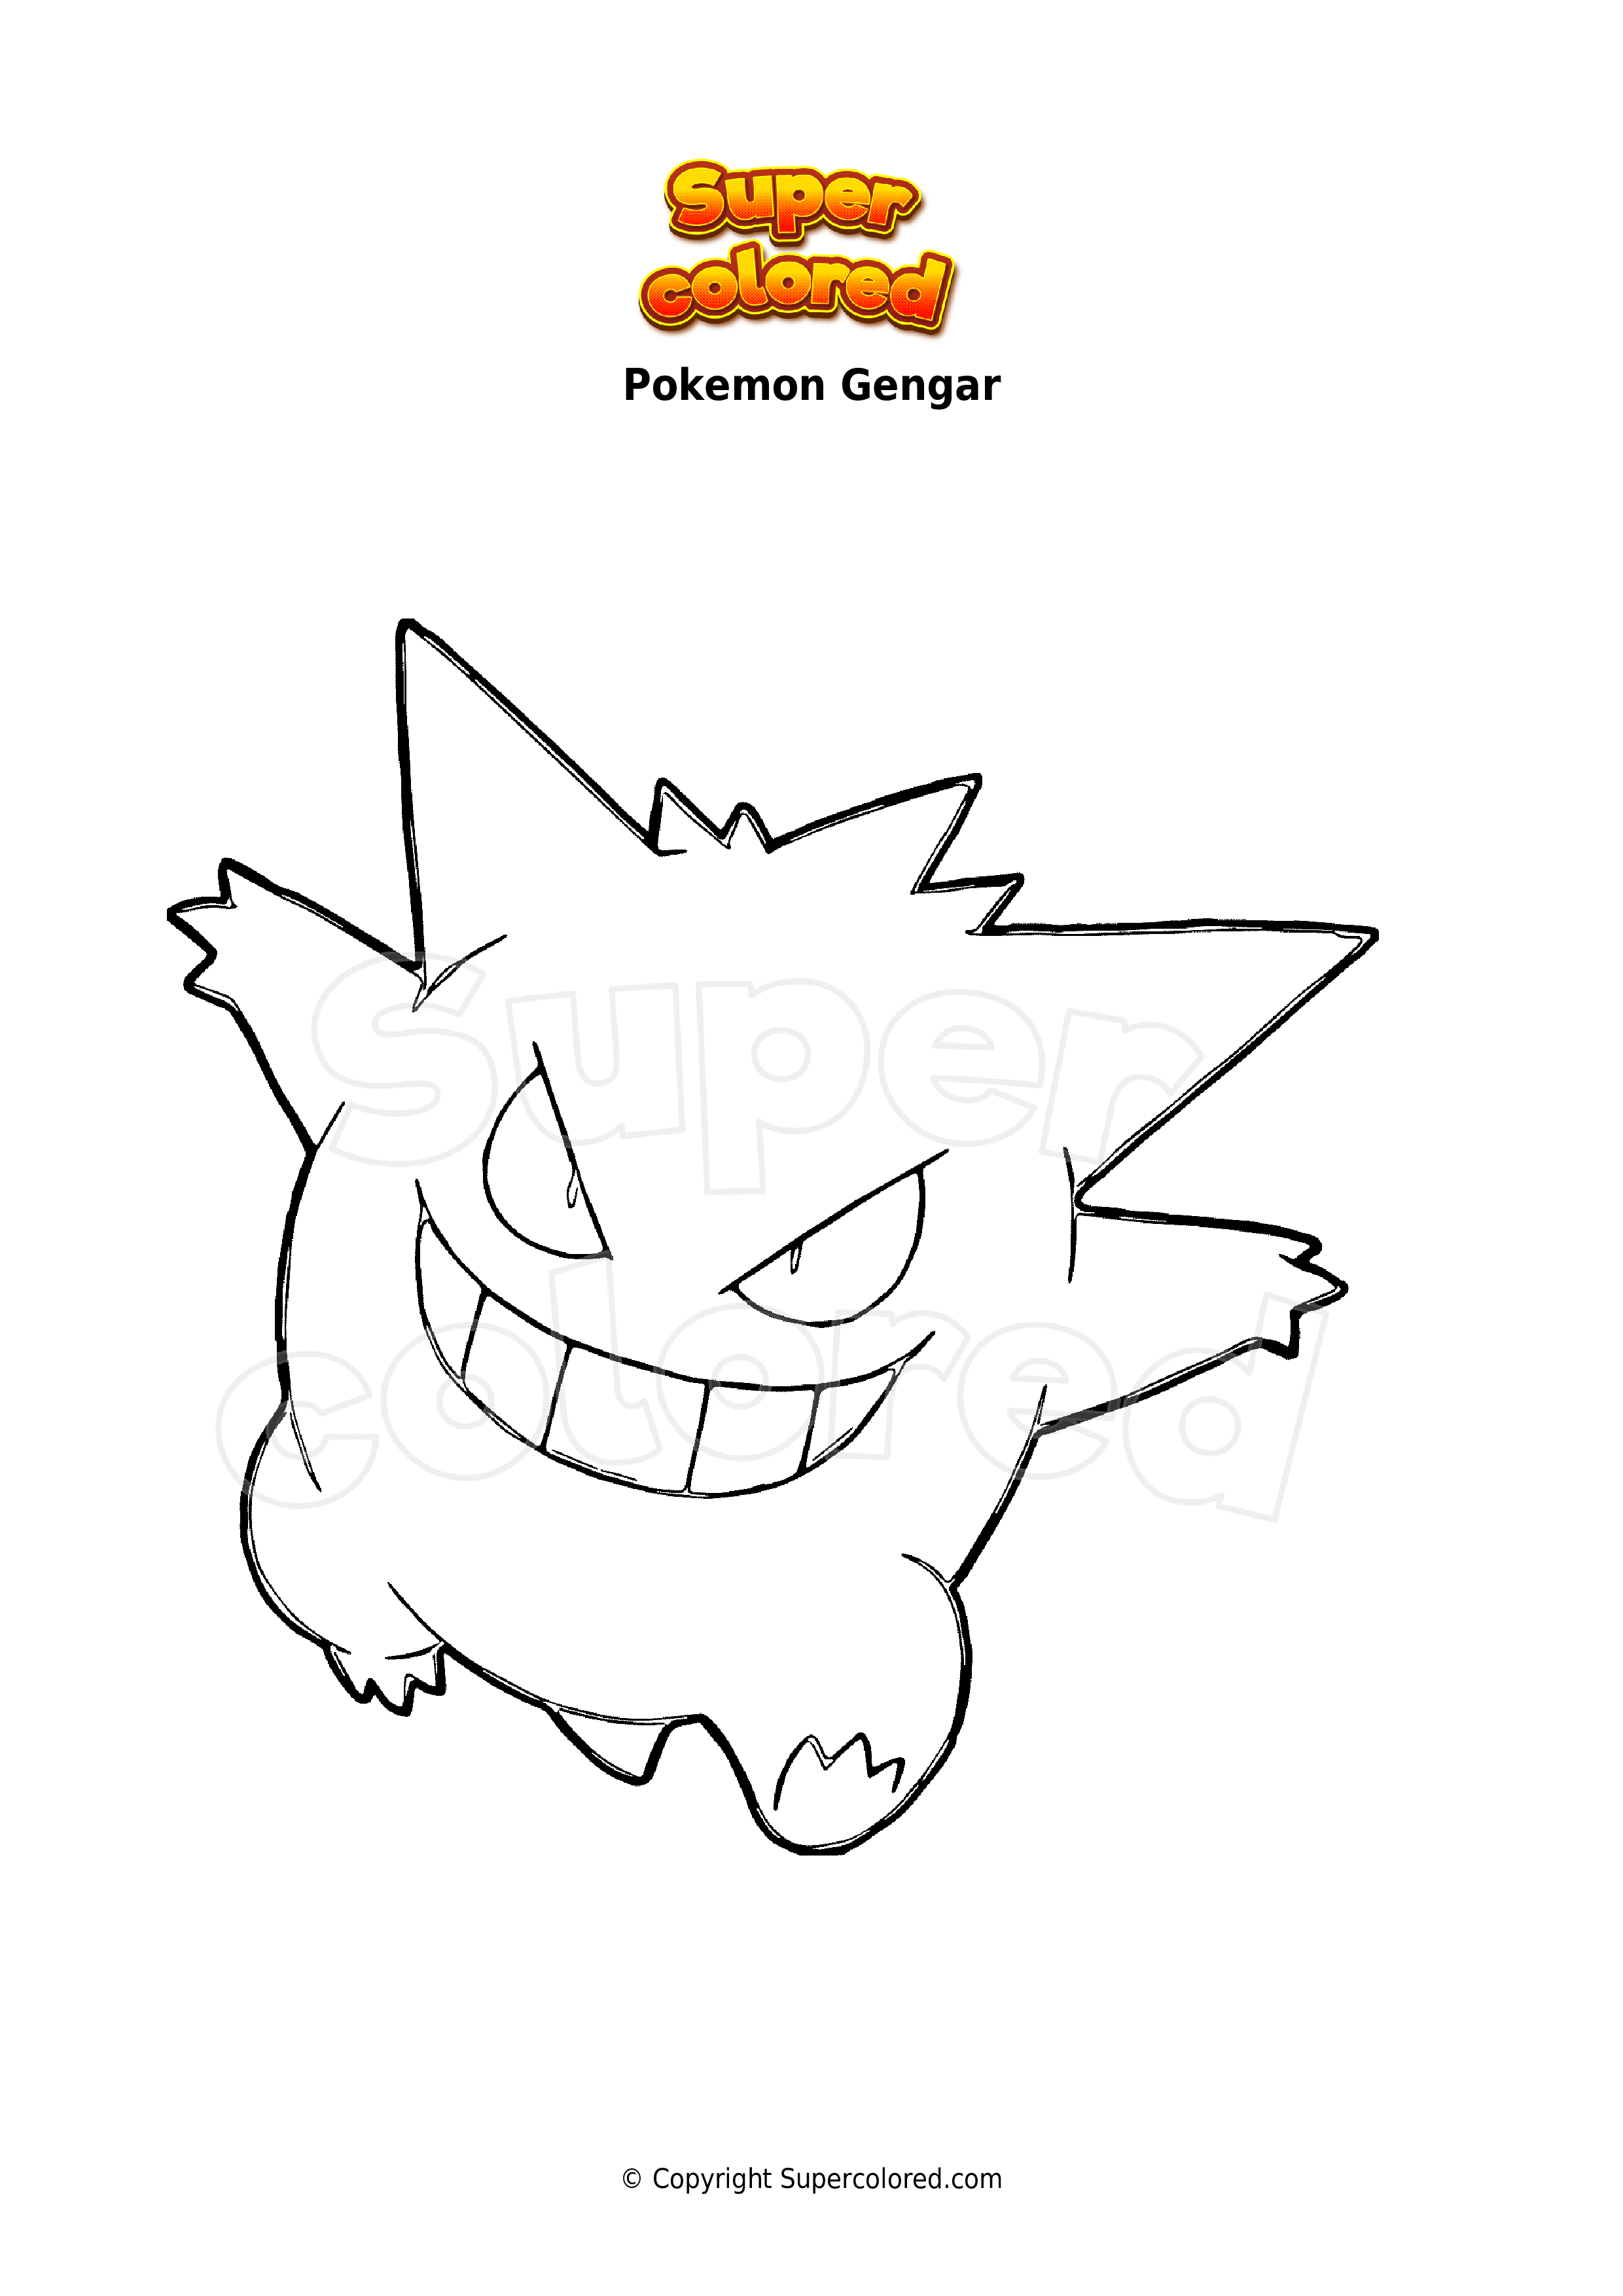 Coloring page pokemon gengar